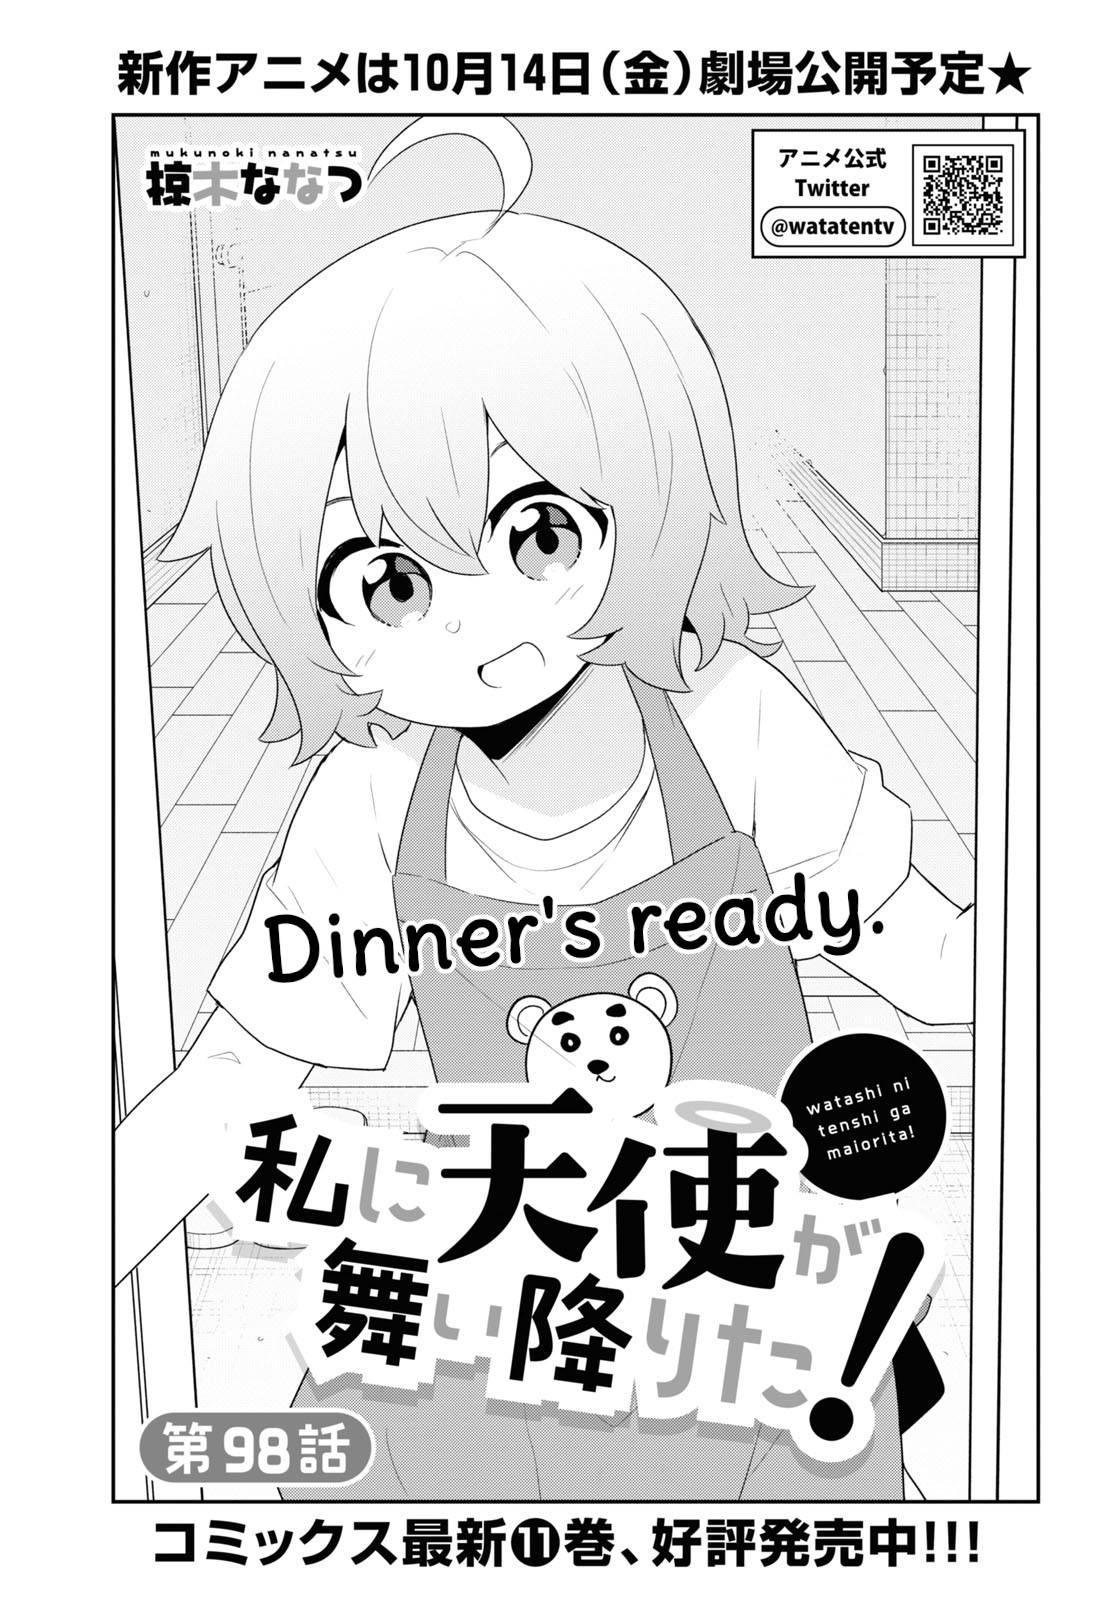 Read Watashi ni Tenshi ga Maiorita! Manga English [New Chapters] Online  Free - MangaClash